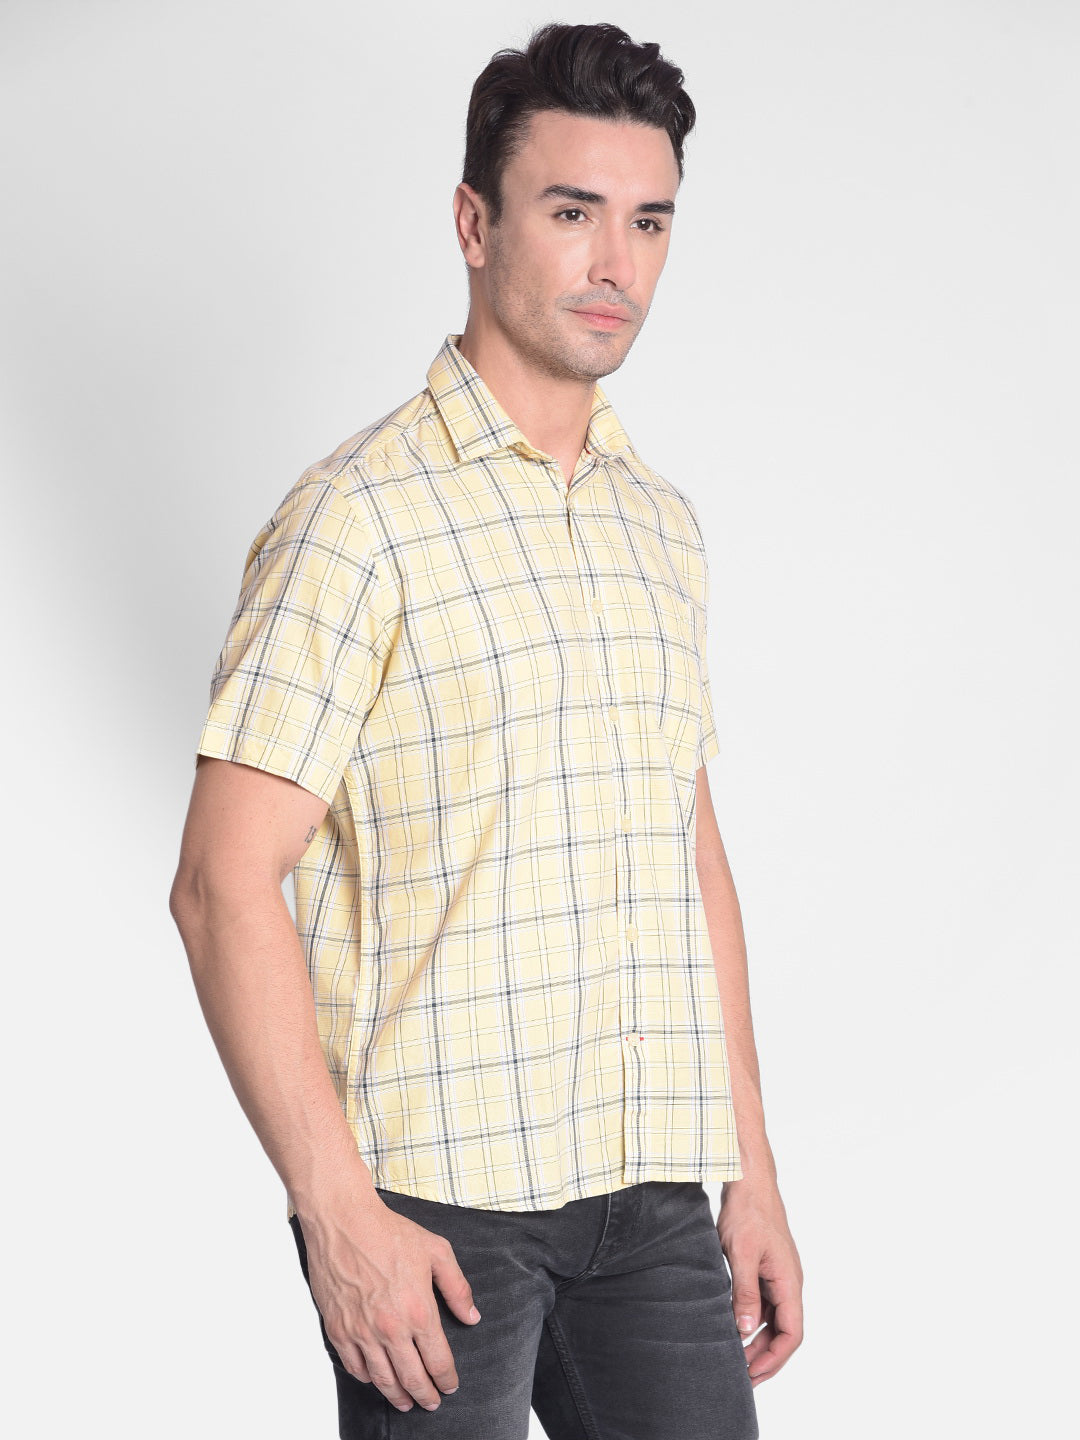 Yellow Checked Shirt-Men shirts-Crimsoune Club